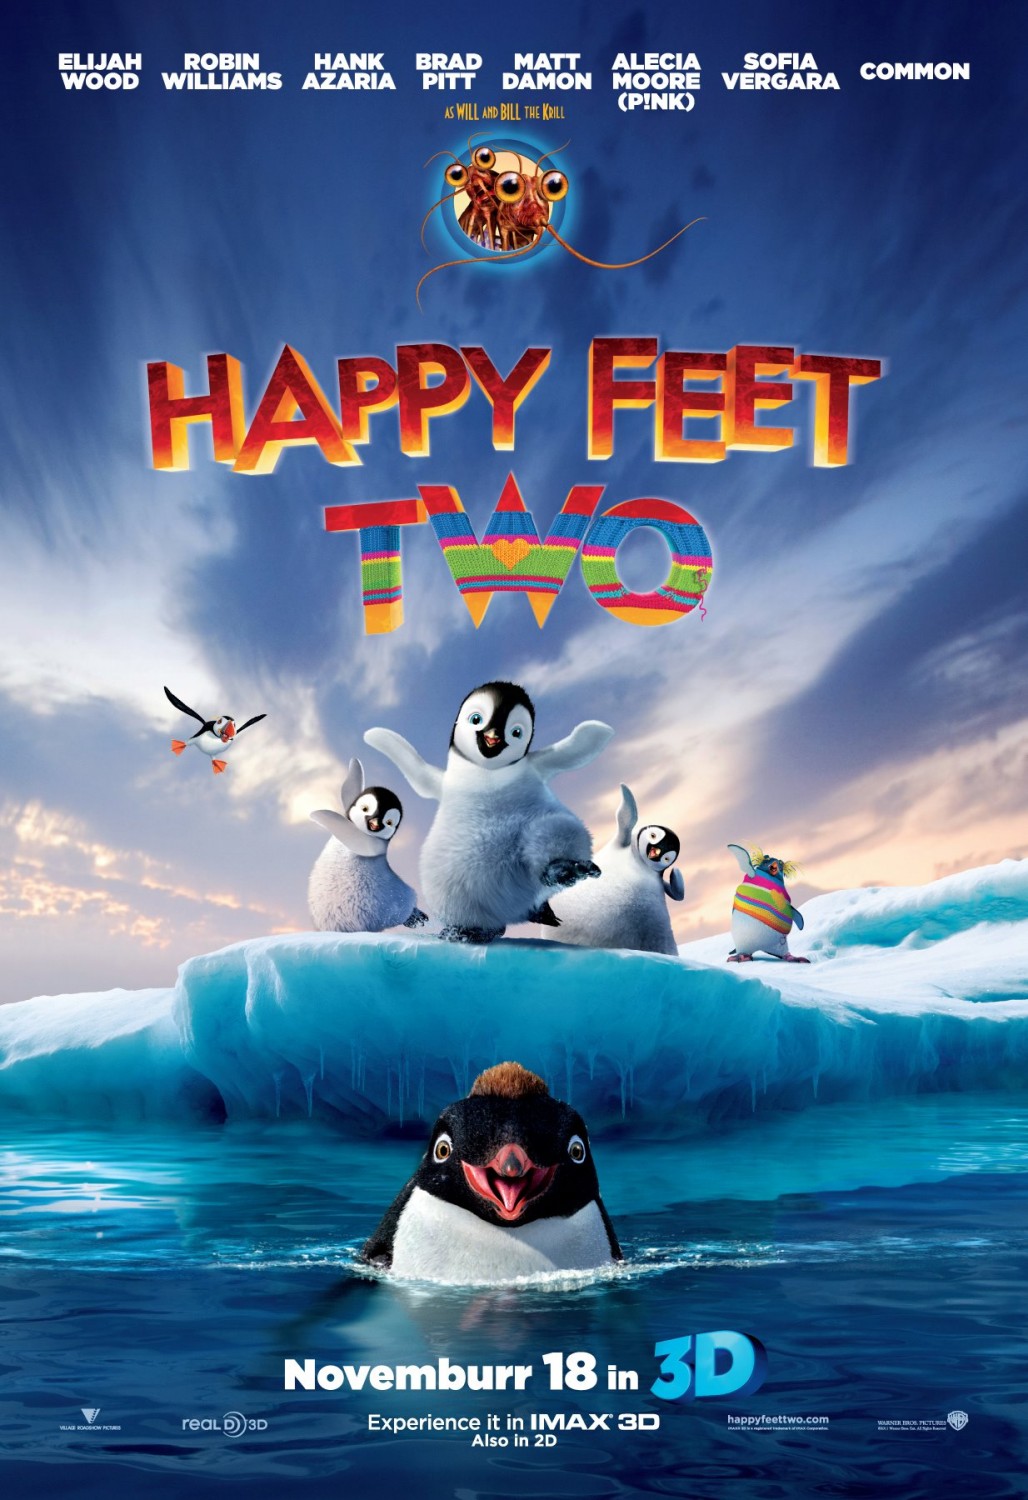 2011 Happy Feet Two